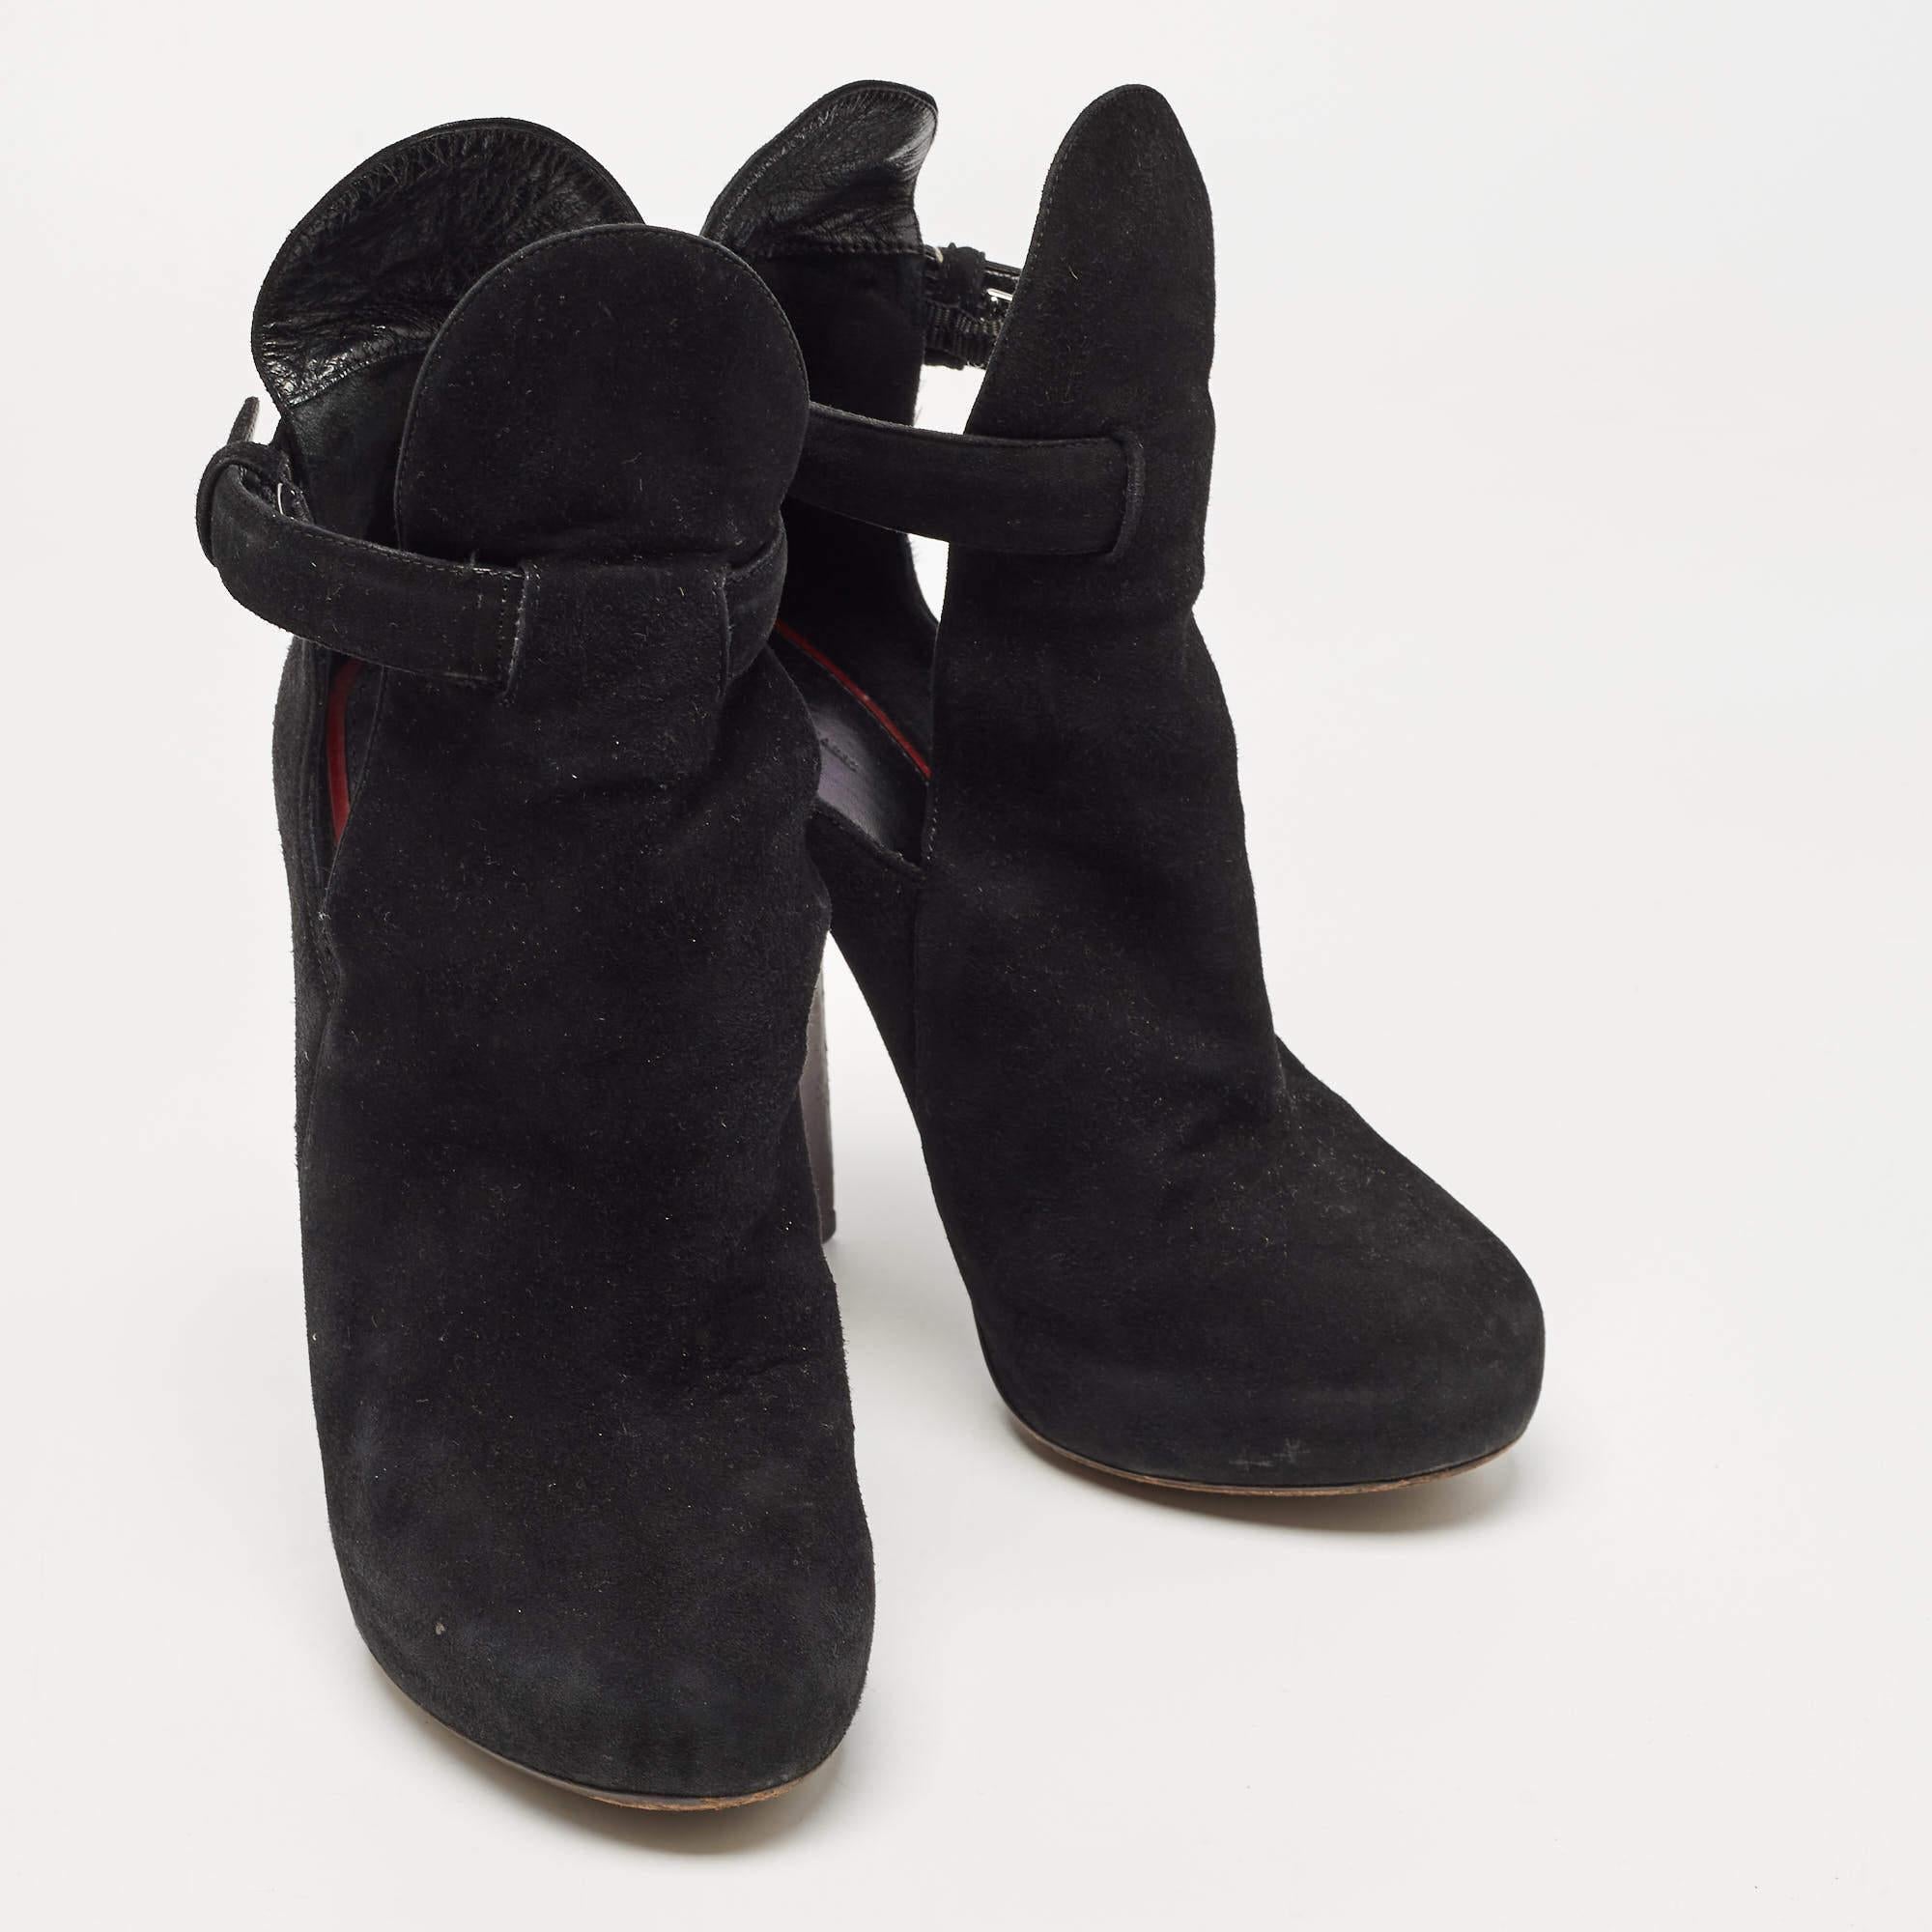 Celine Black Suede Platform Block Heel Ankle Booties Size 37 In Good Condition For Sale In Dubai, Al Qouz 2